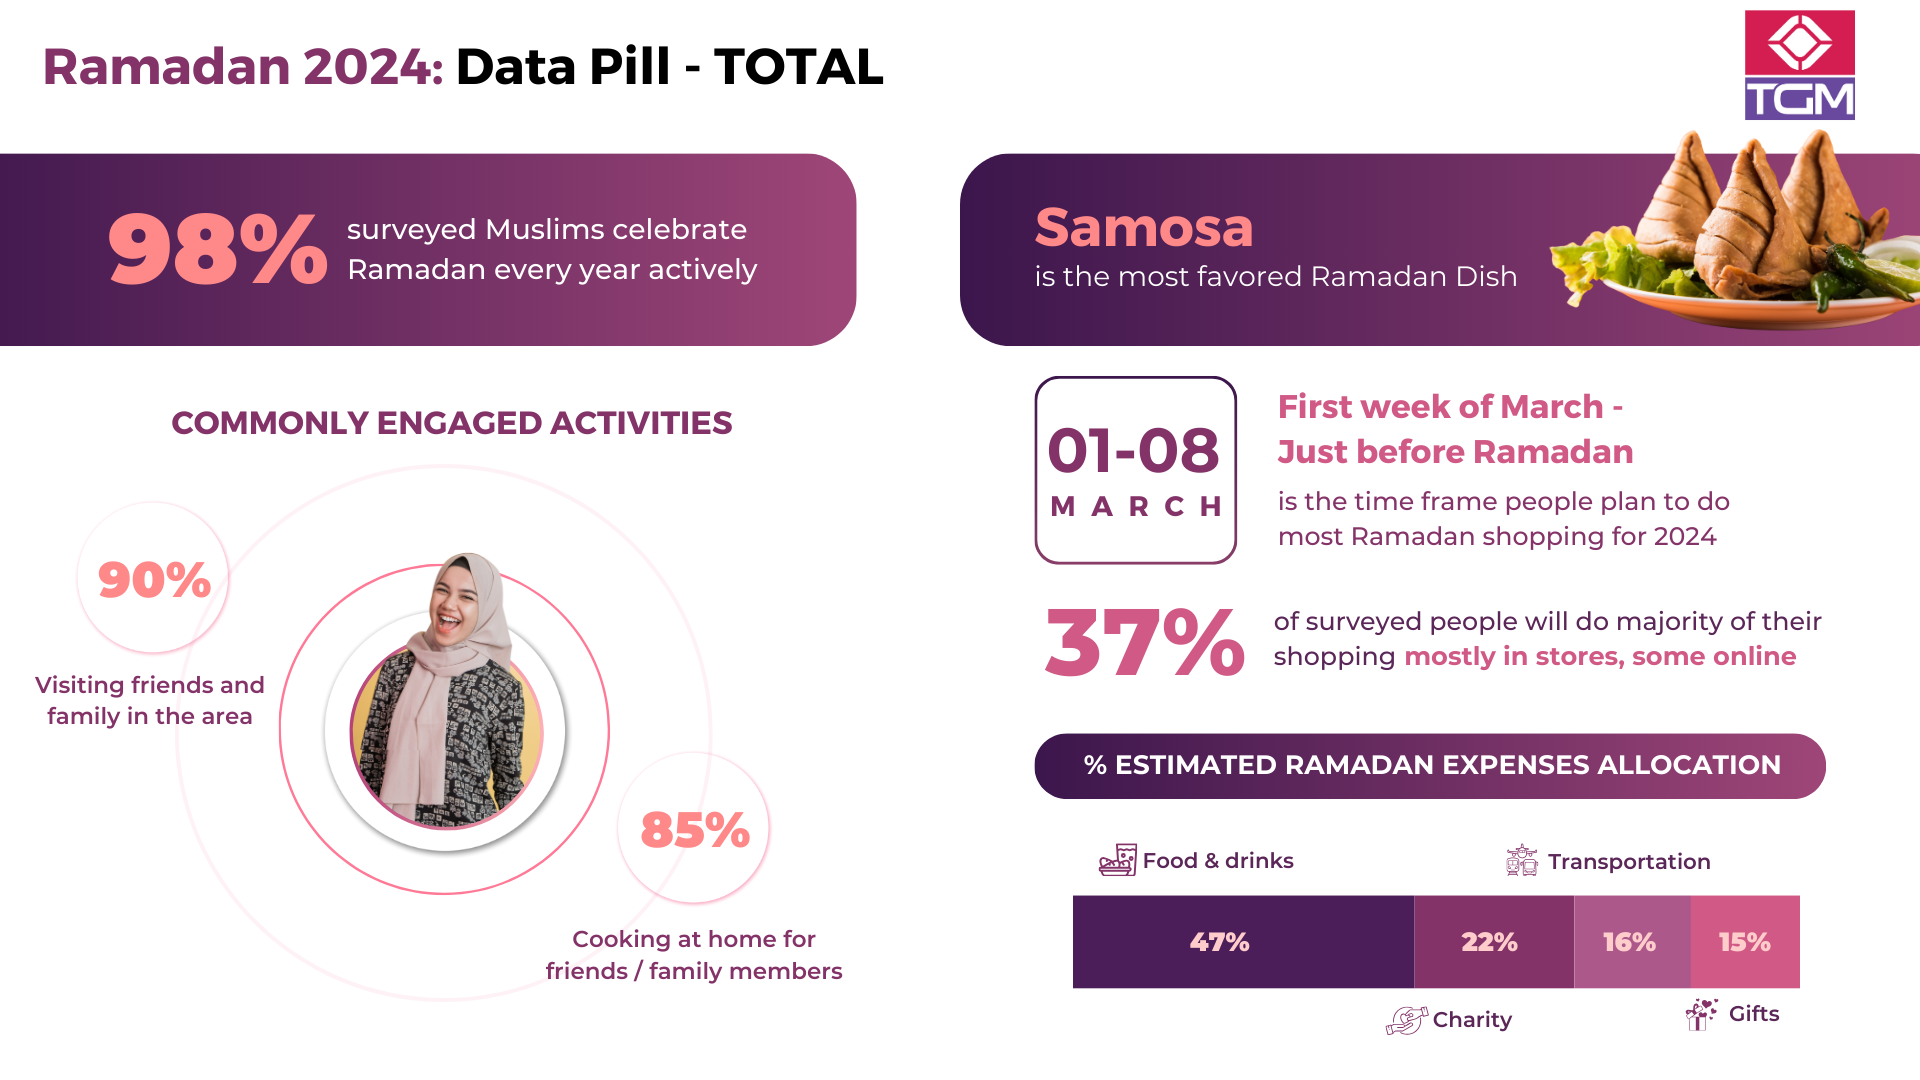 Ramadan 2024 - Data Pill